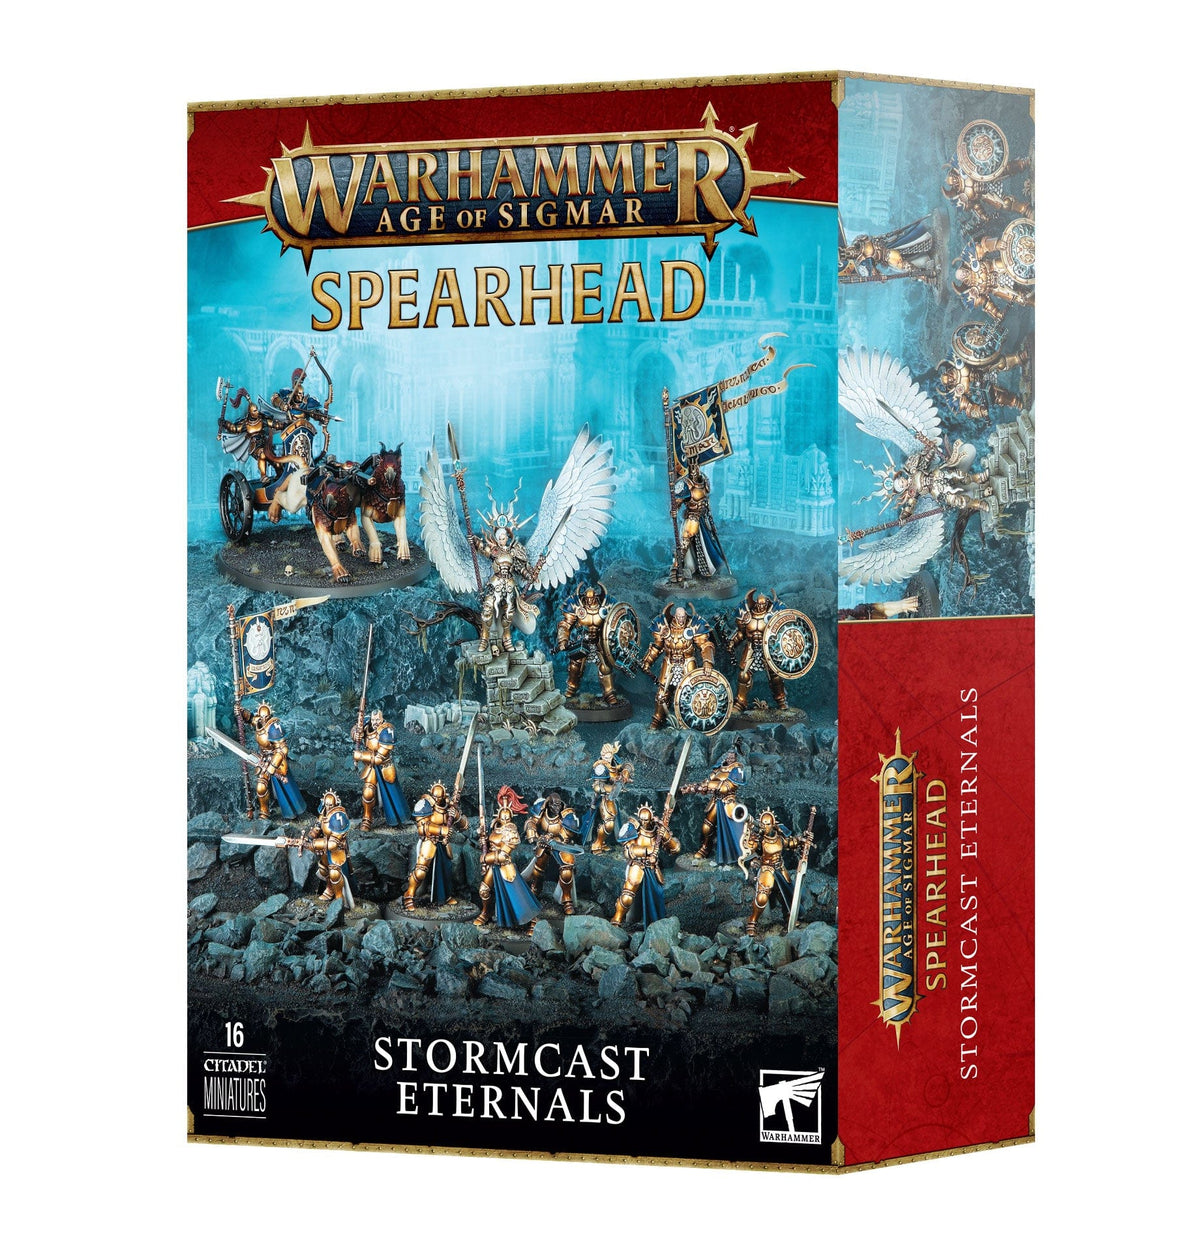 Warhammer: Age of Sigmar - Spearhead: Stormcast Eternals